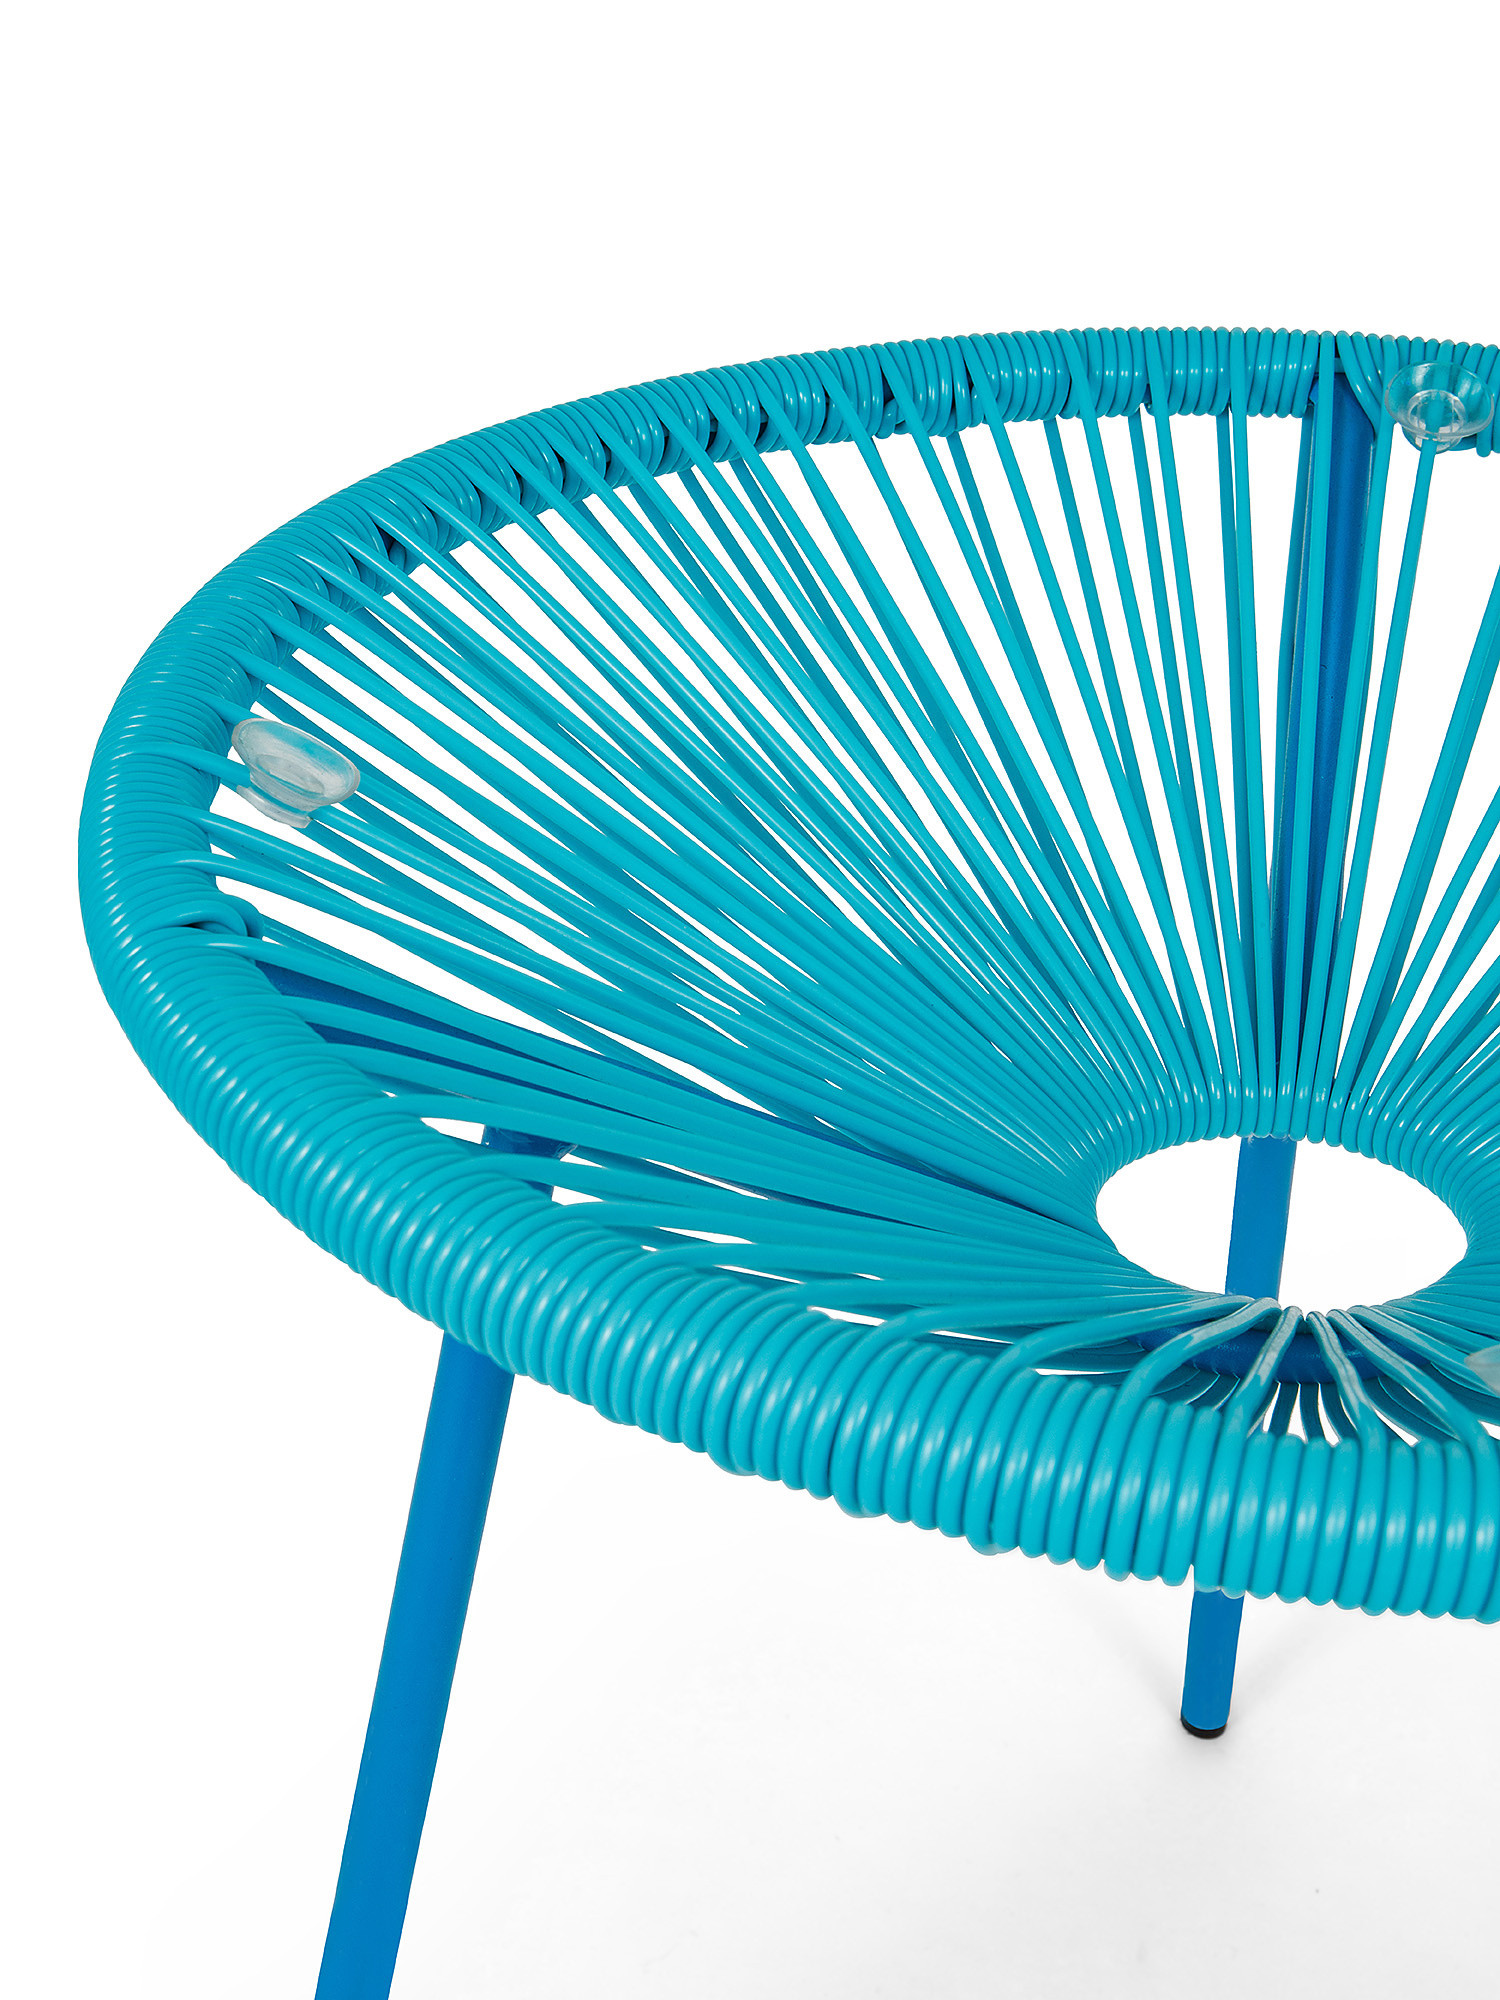 Tavolino da esterno Round, Azzurro, large image number 1